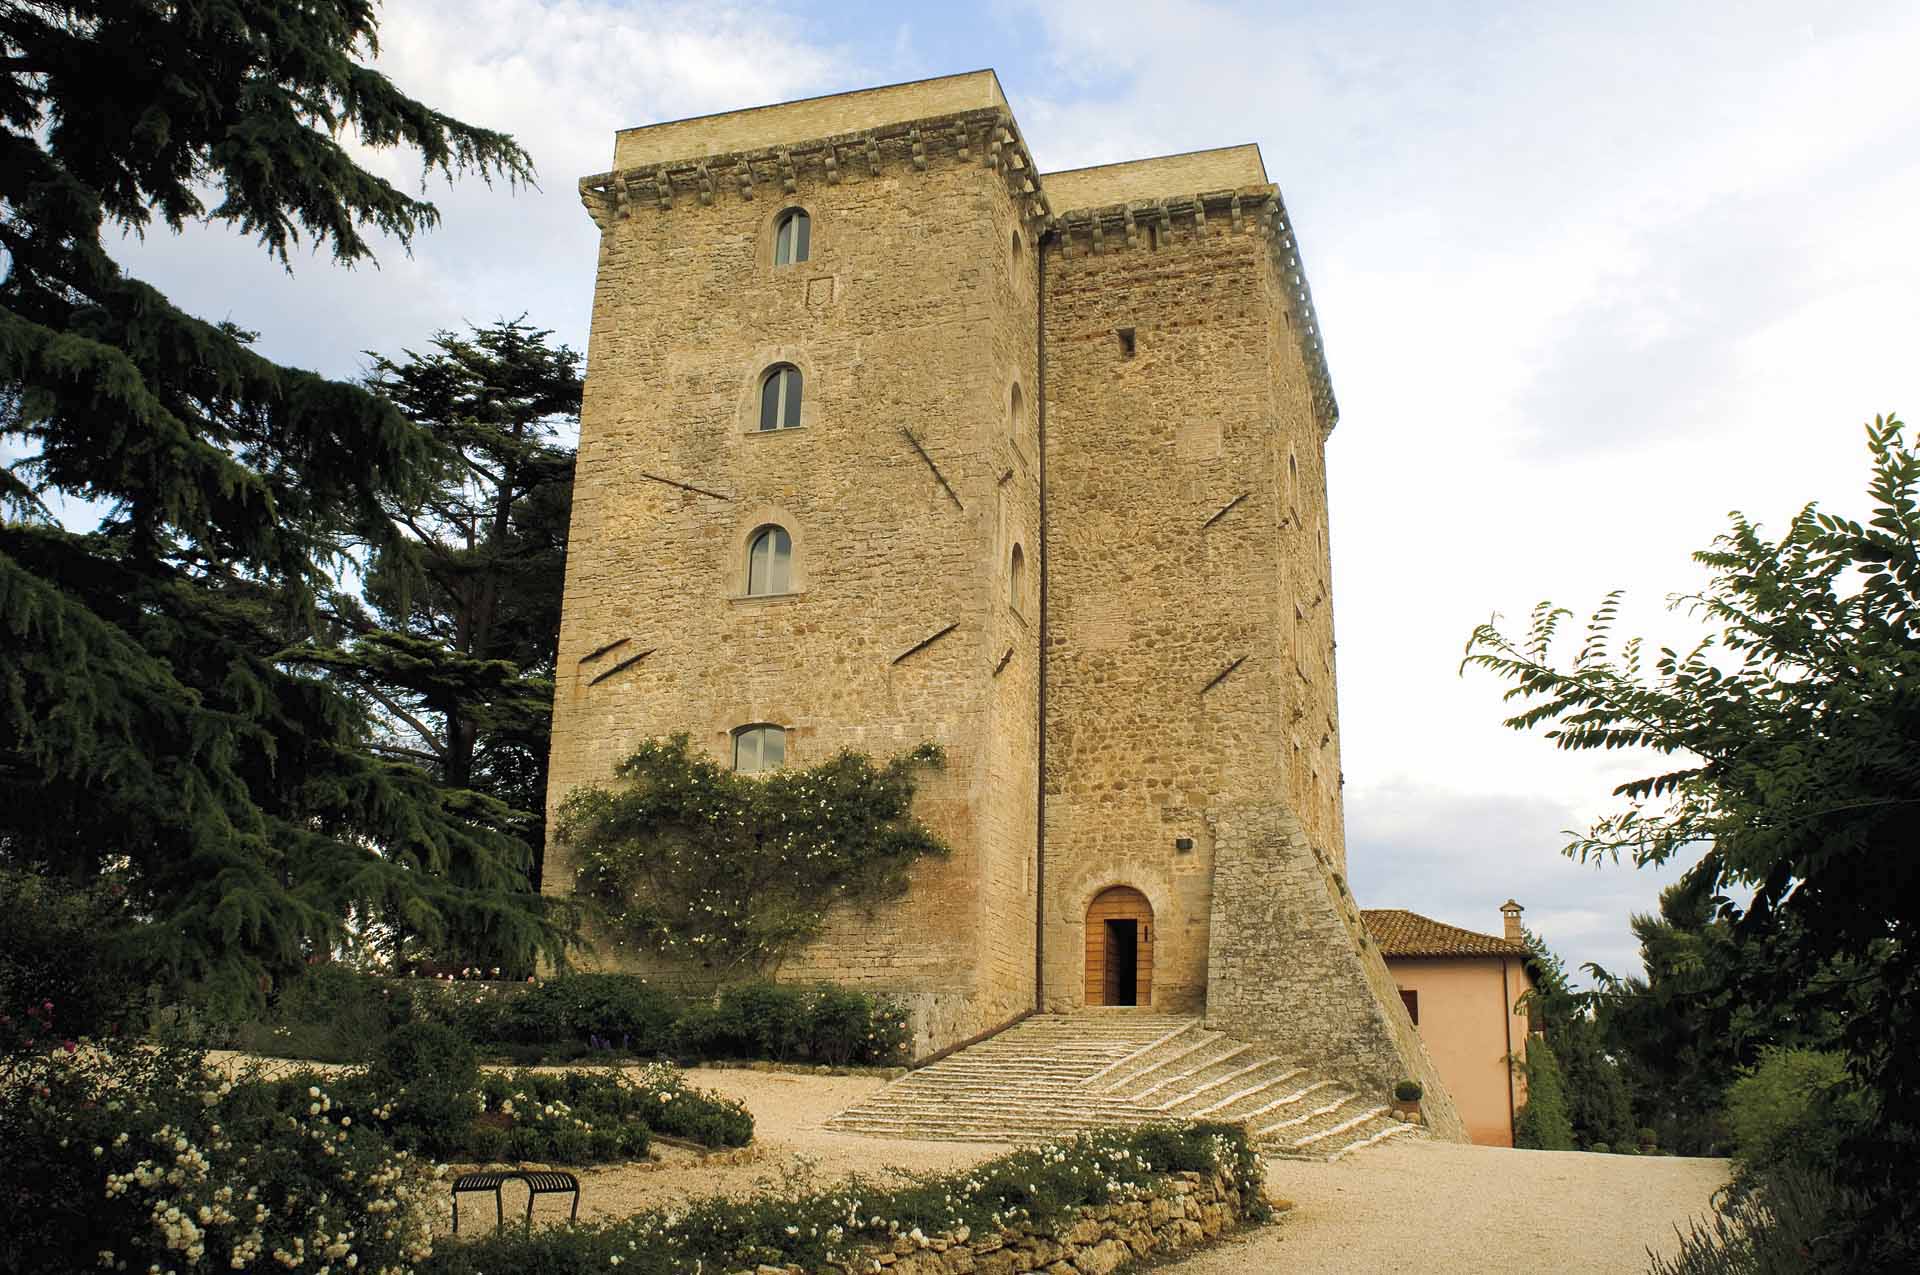 Torre Almonte residenza d’epoca todi perugia 00007